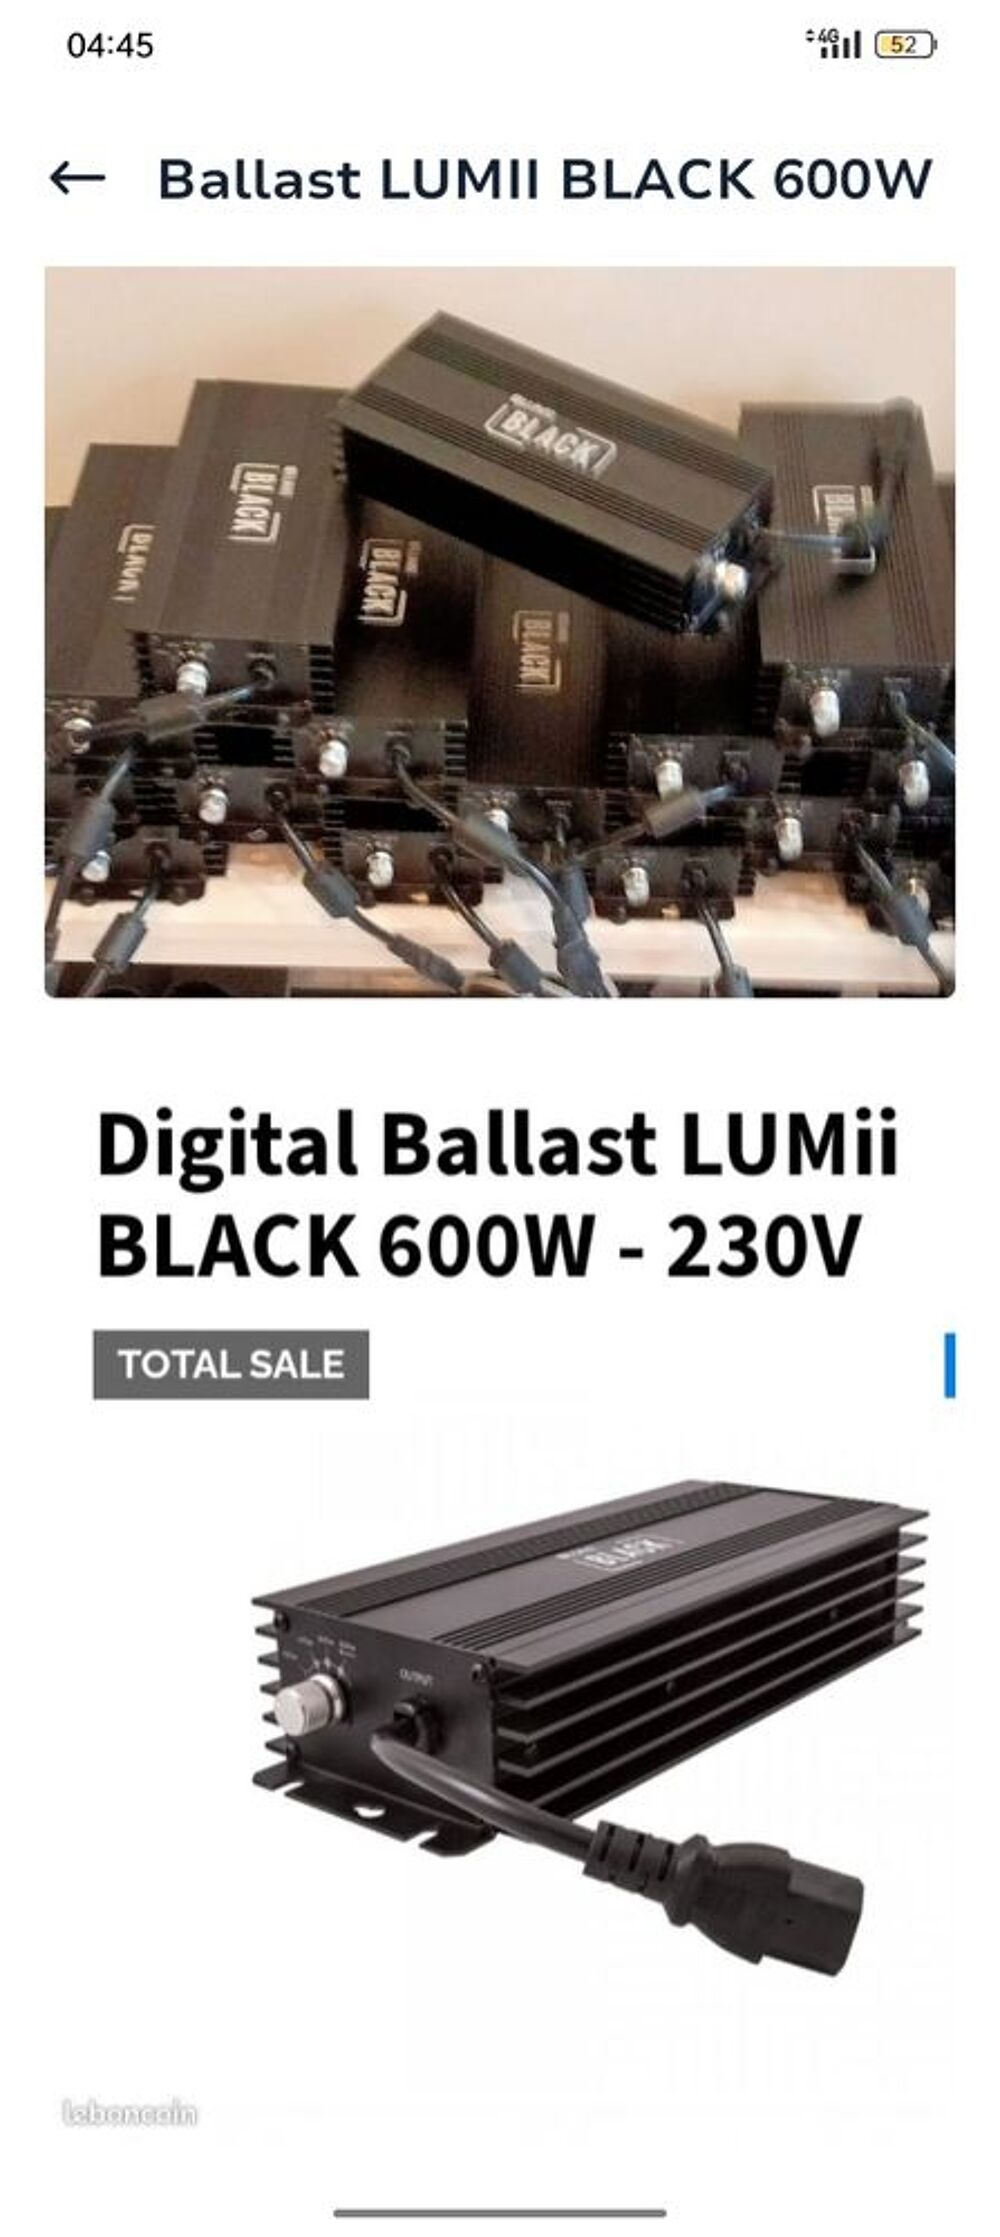 Ballast LUMII BLACK 600W Bricolage